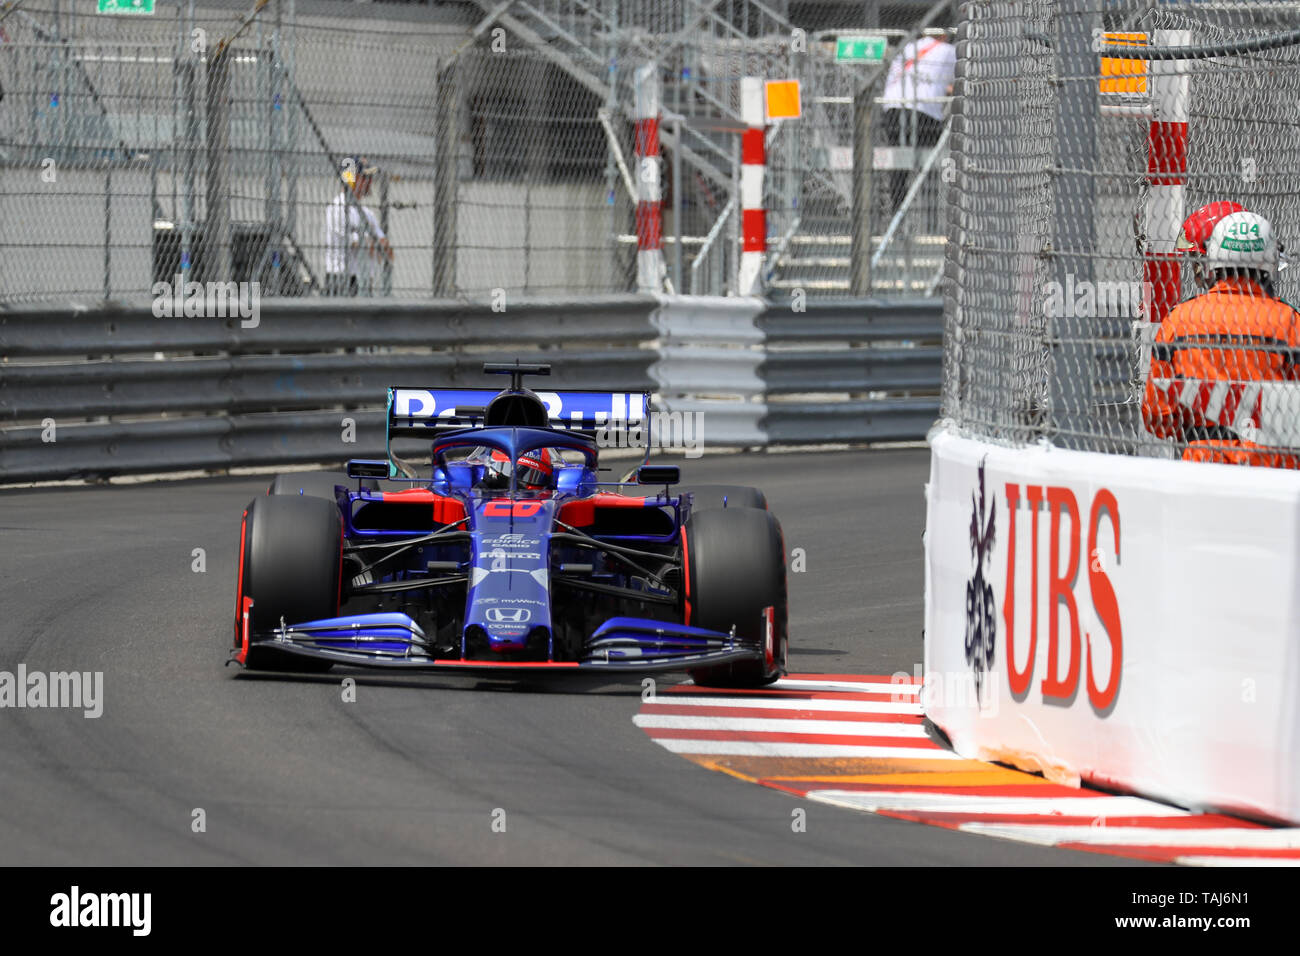 Monte Carlo, Monaco. 25th May , 2019. Daniil Kvjat of Red Bull Toro Rosso Honda on track during qualifying for  the F1 Grand Prix of Monaco Credit: Marco Canoniero/Alamy Live News Stock Photo